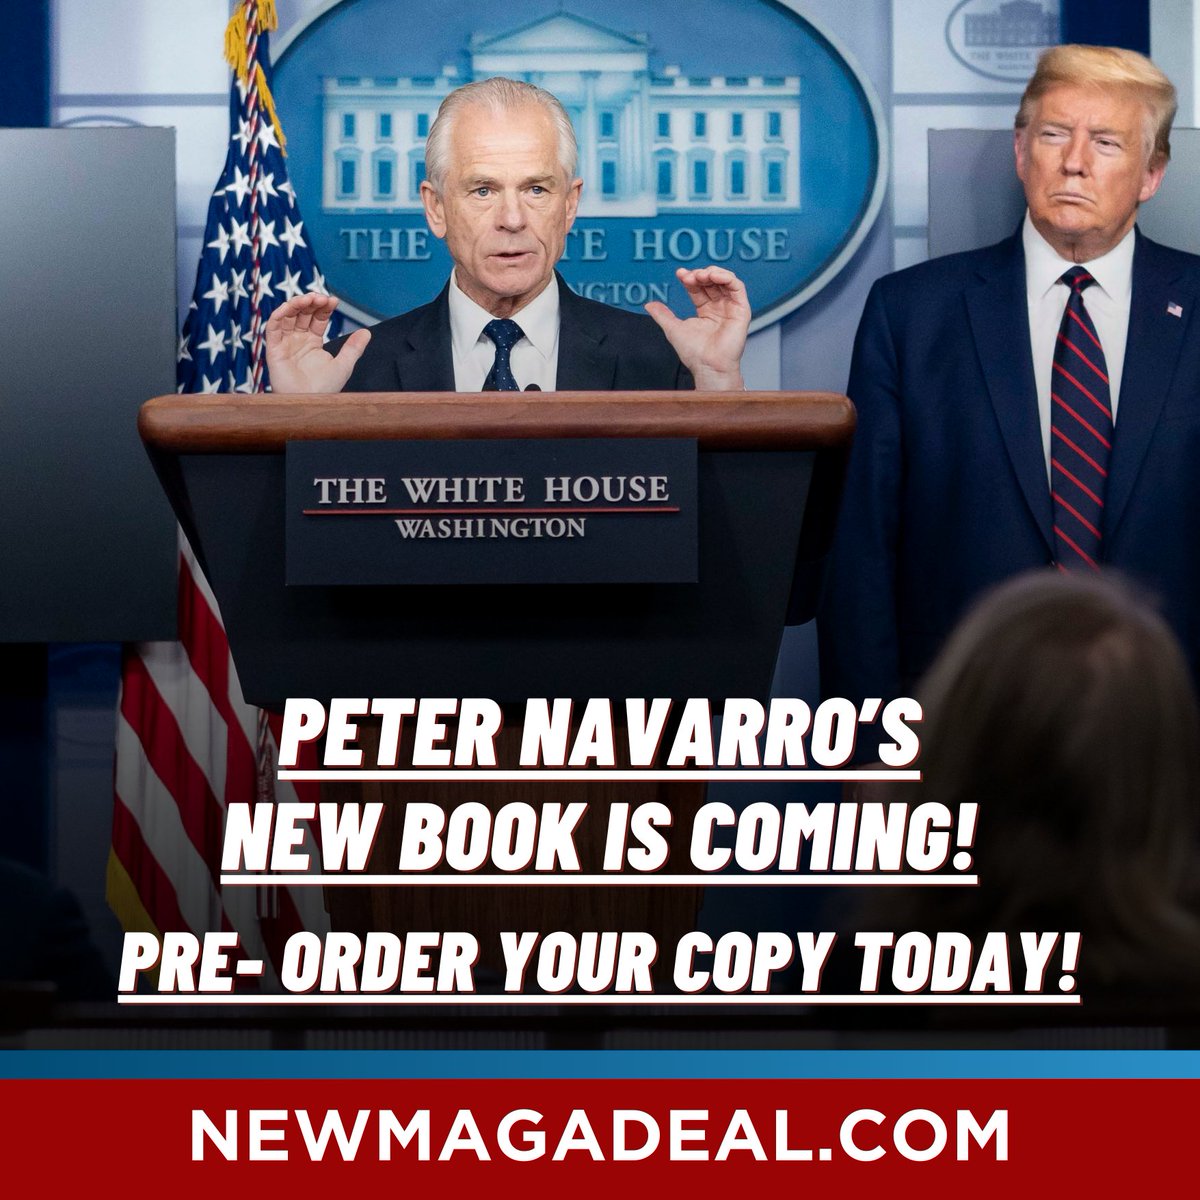 Go to NEWMAGADEAL.com today to pre-order his book!